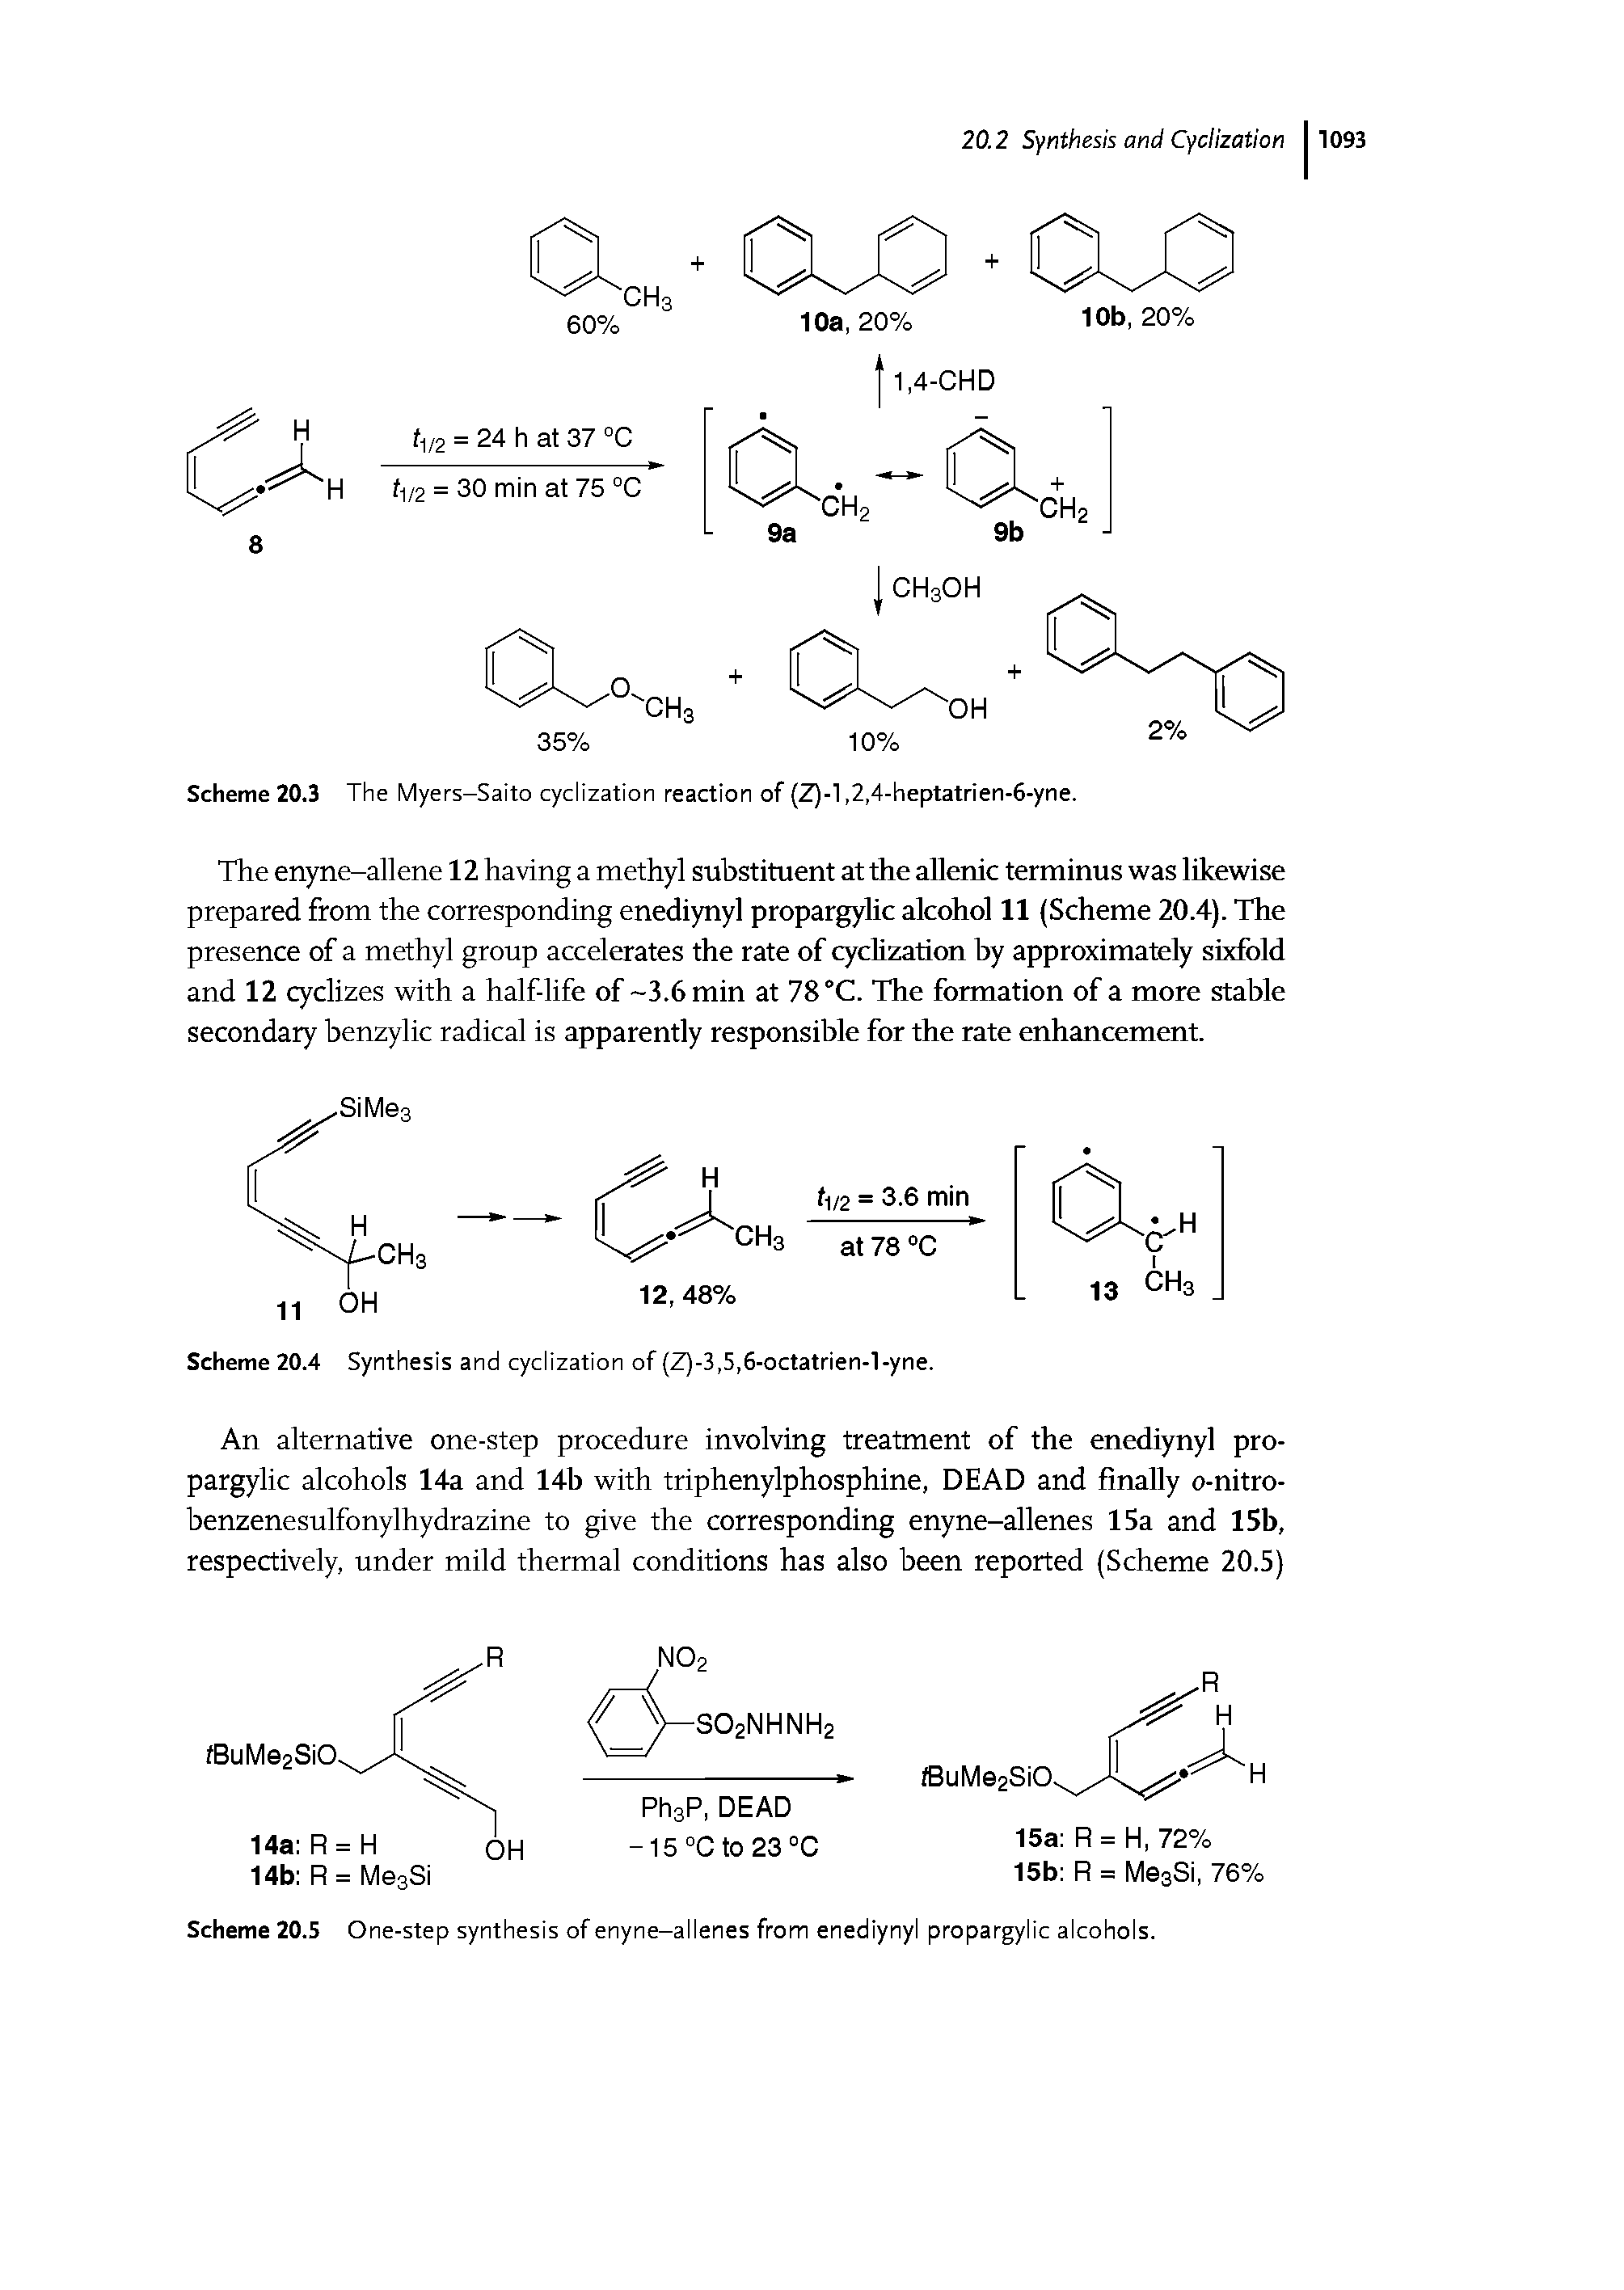 Scheme 20.3 The Myers-Saito cyclization reaction of (Z)-l, 2,4-heptatrien-6-yne.